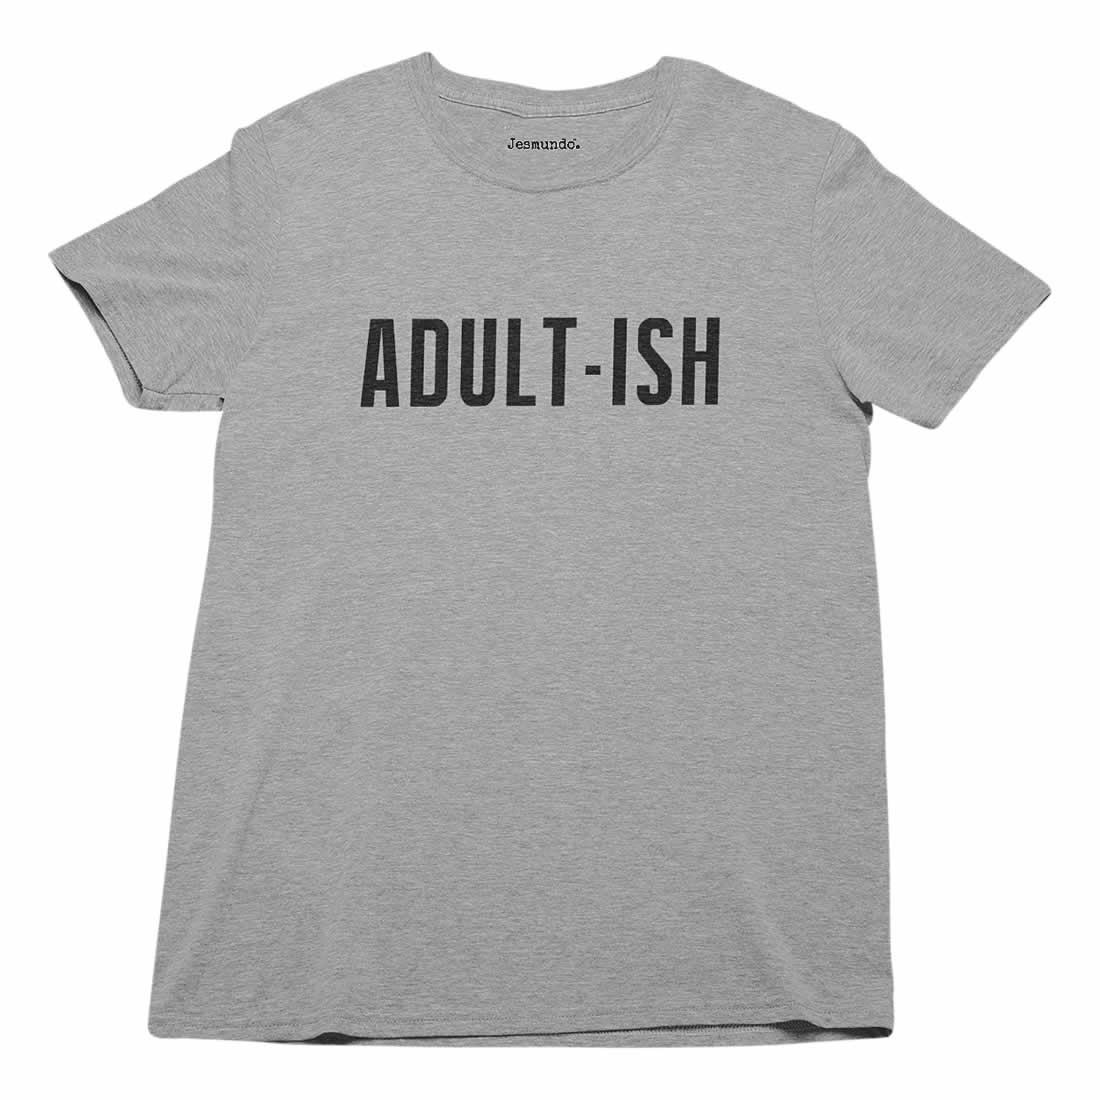 Adult-Ish T Shirt